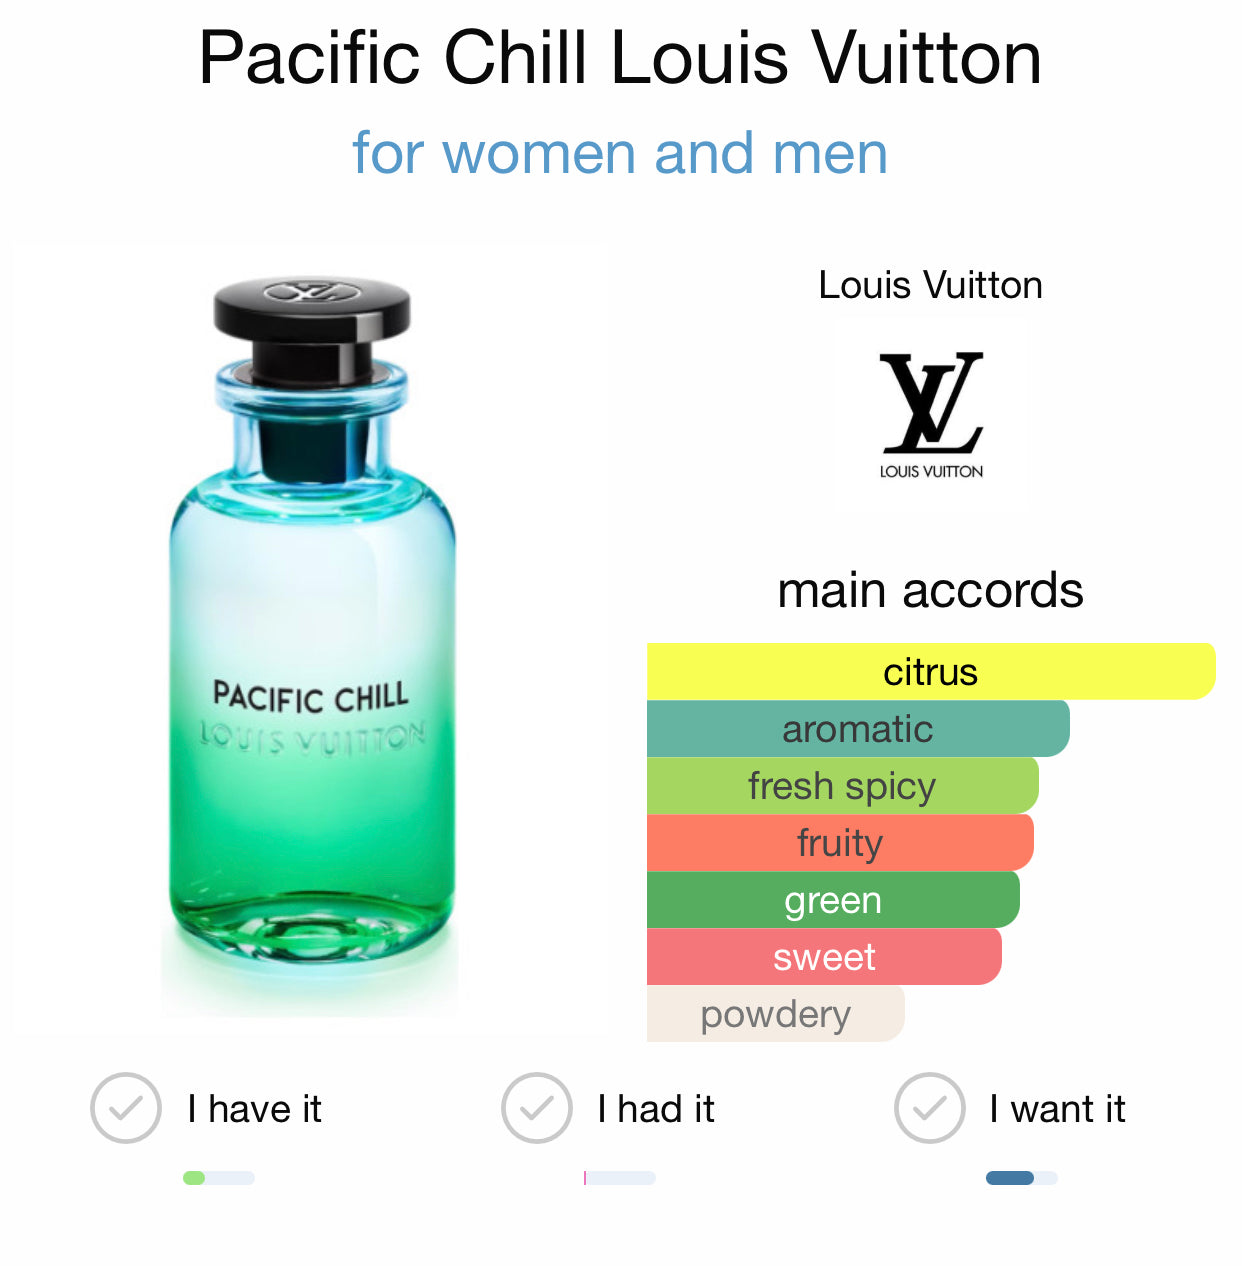 Louis Vuitton Pacific Chill Parfum. Pacific Chill Louis Vuitton. Луи Виттон Пацифик чил 100. Louis Vuitton Pacific Chill Swim. Pacific chill louis